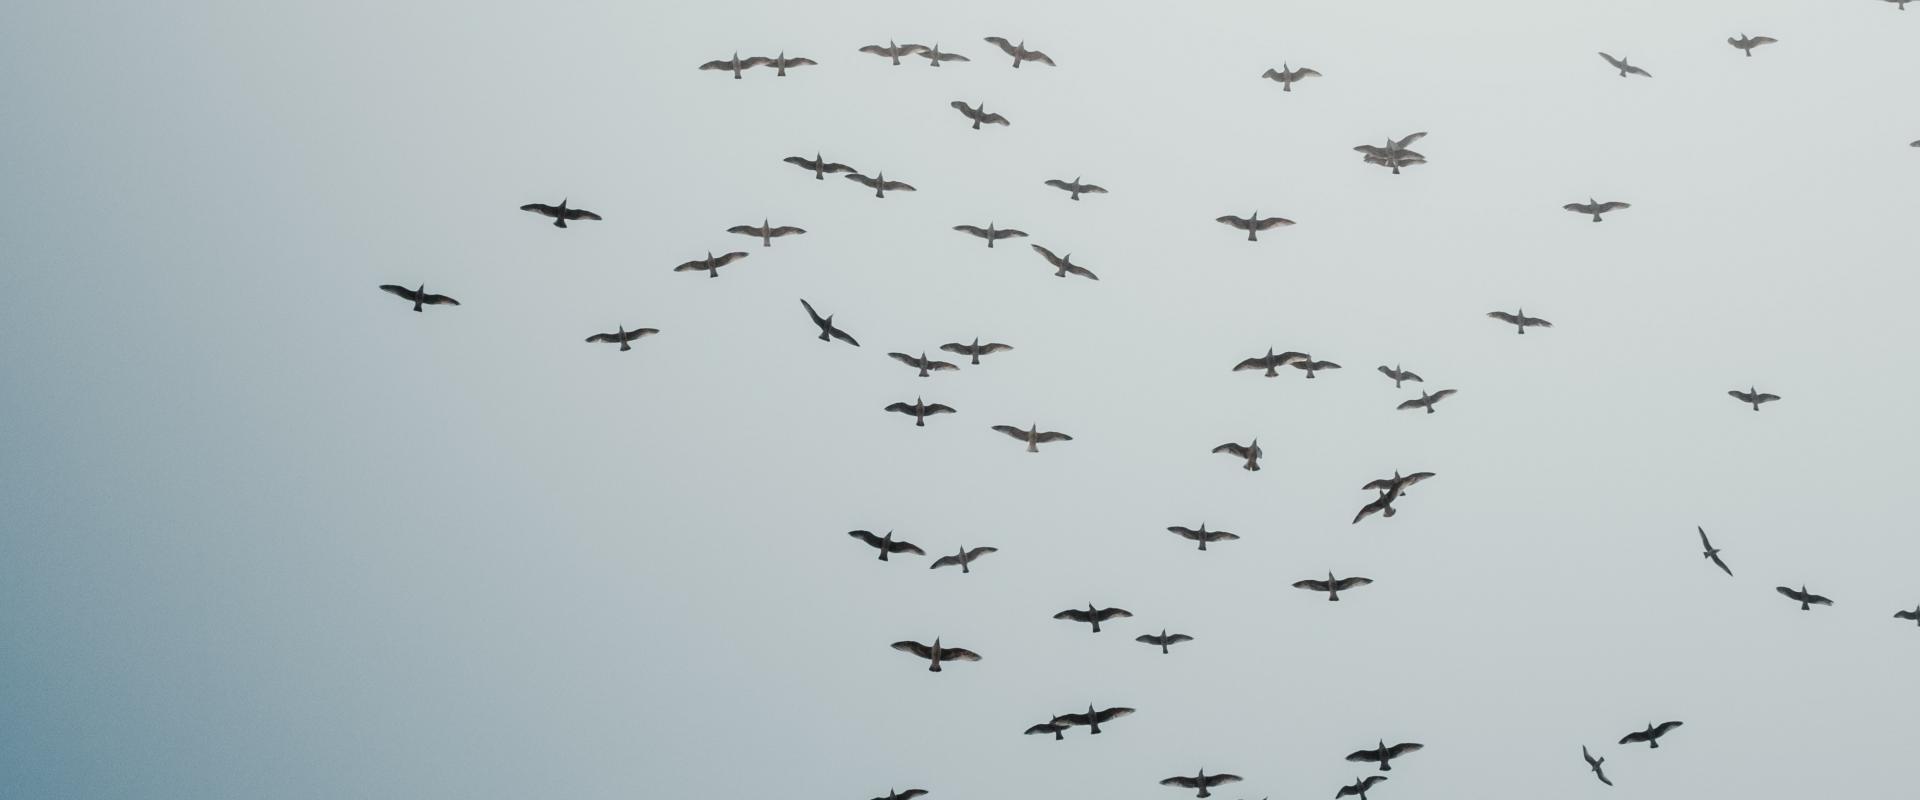 birds flying in flock